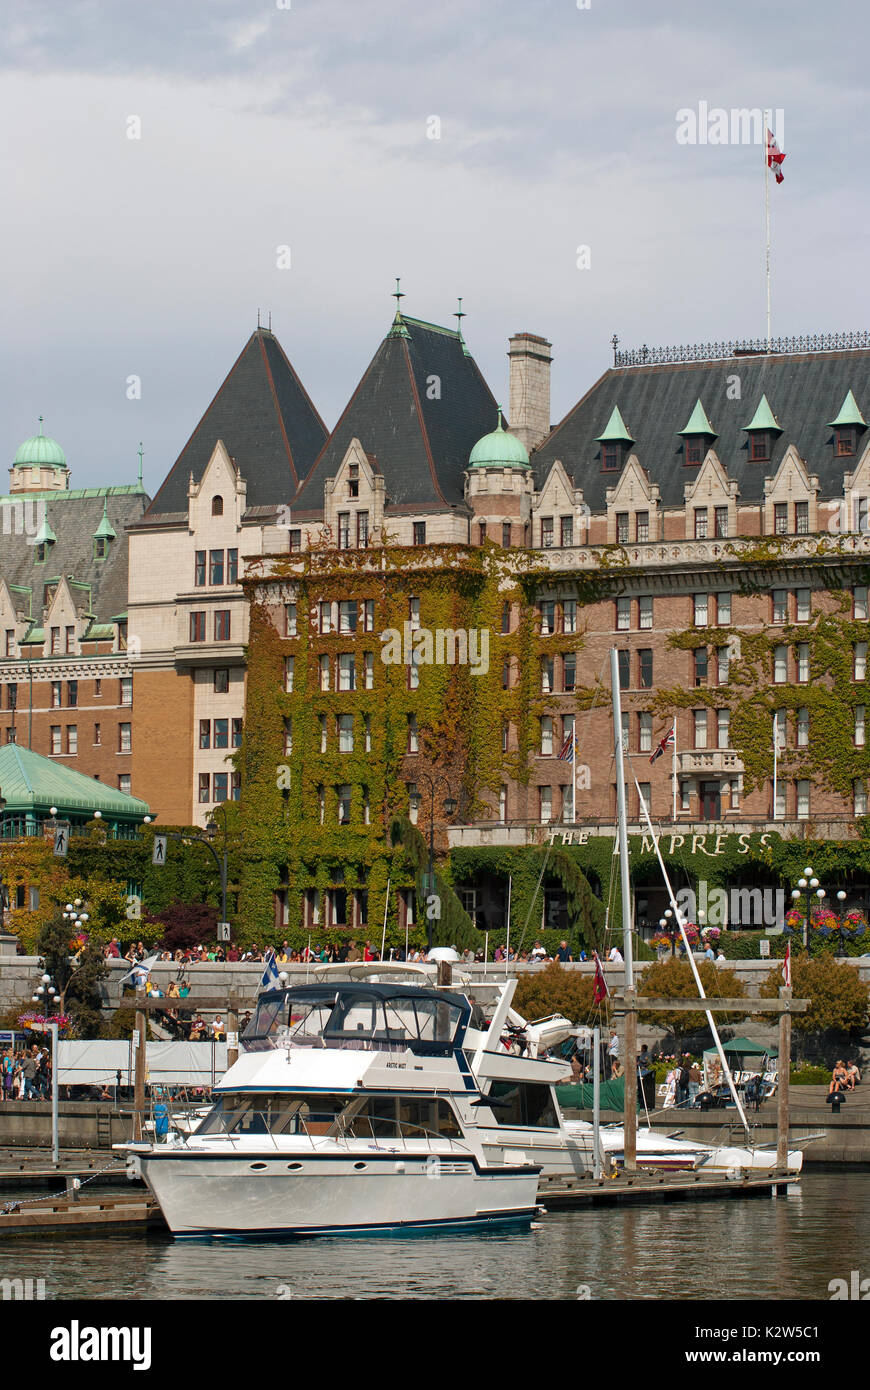 Facade of the Fairmont Empress Hotel (1908, designed by Francis Rattenbury), Victoria, Vancouver Island, British Columbia, Canada Stock Photo